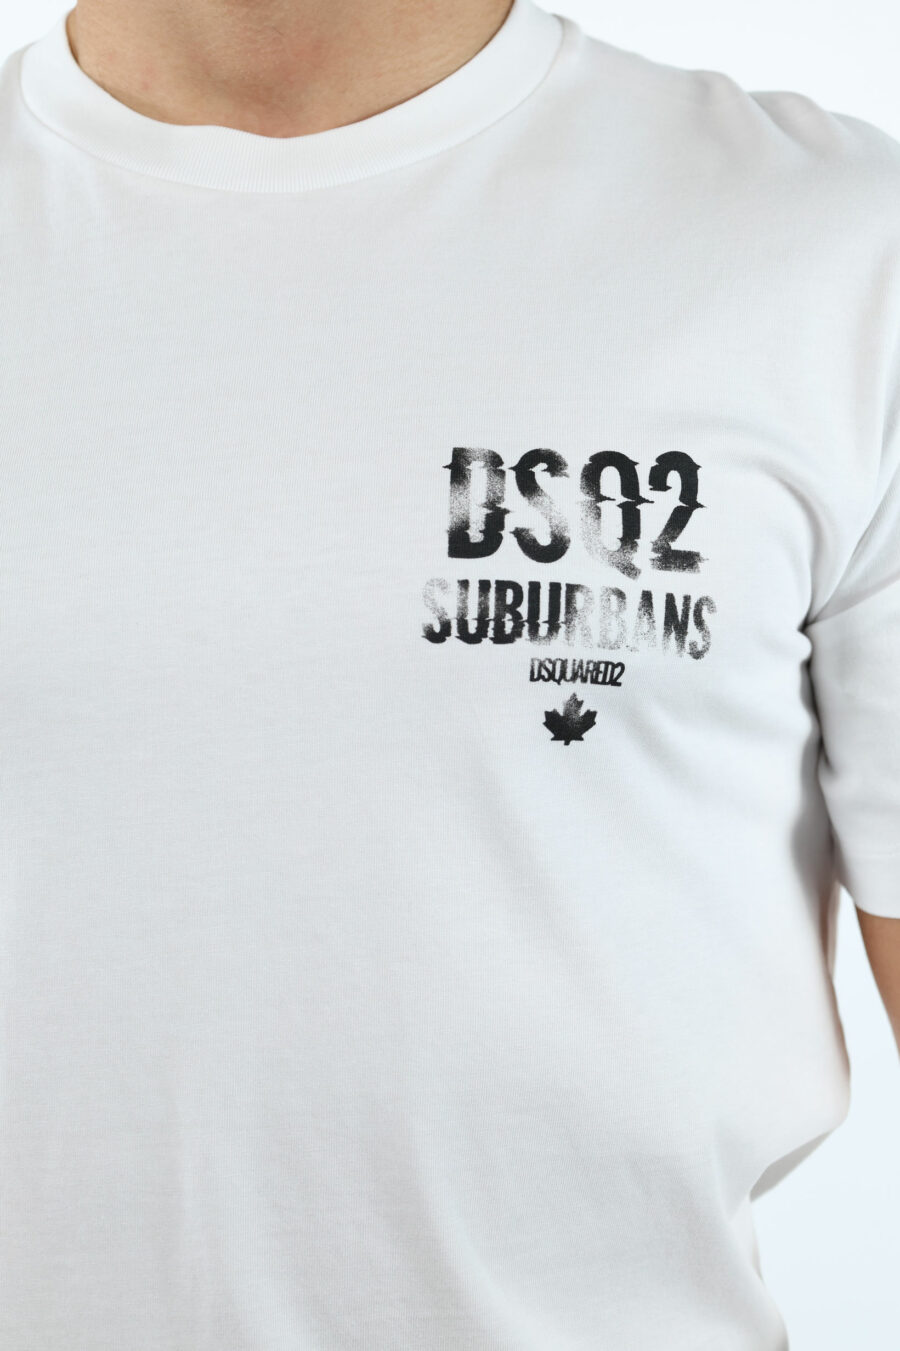 Camiseta blanca con minilogo "suburbans" negro - 106624